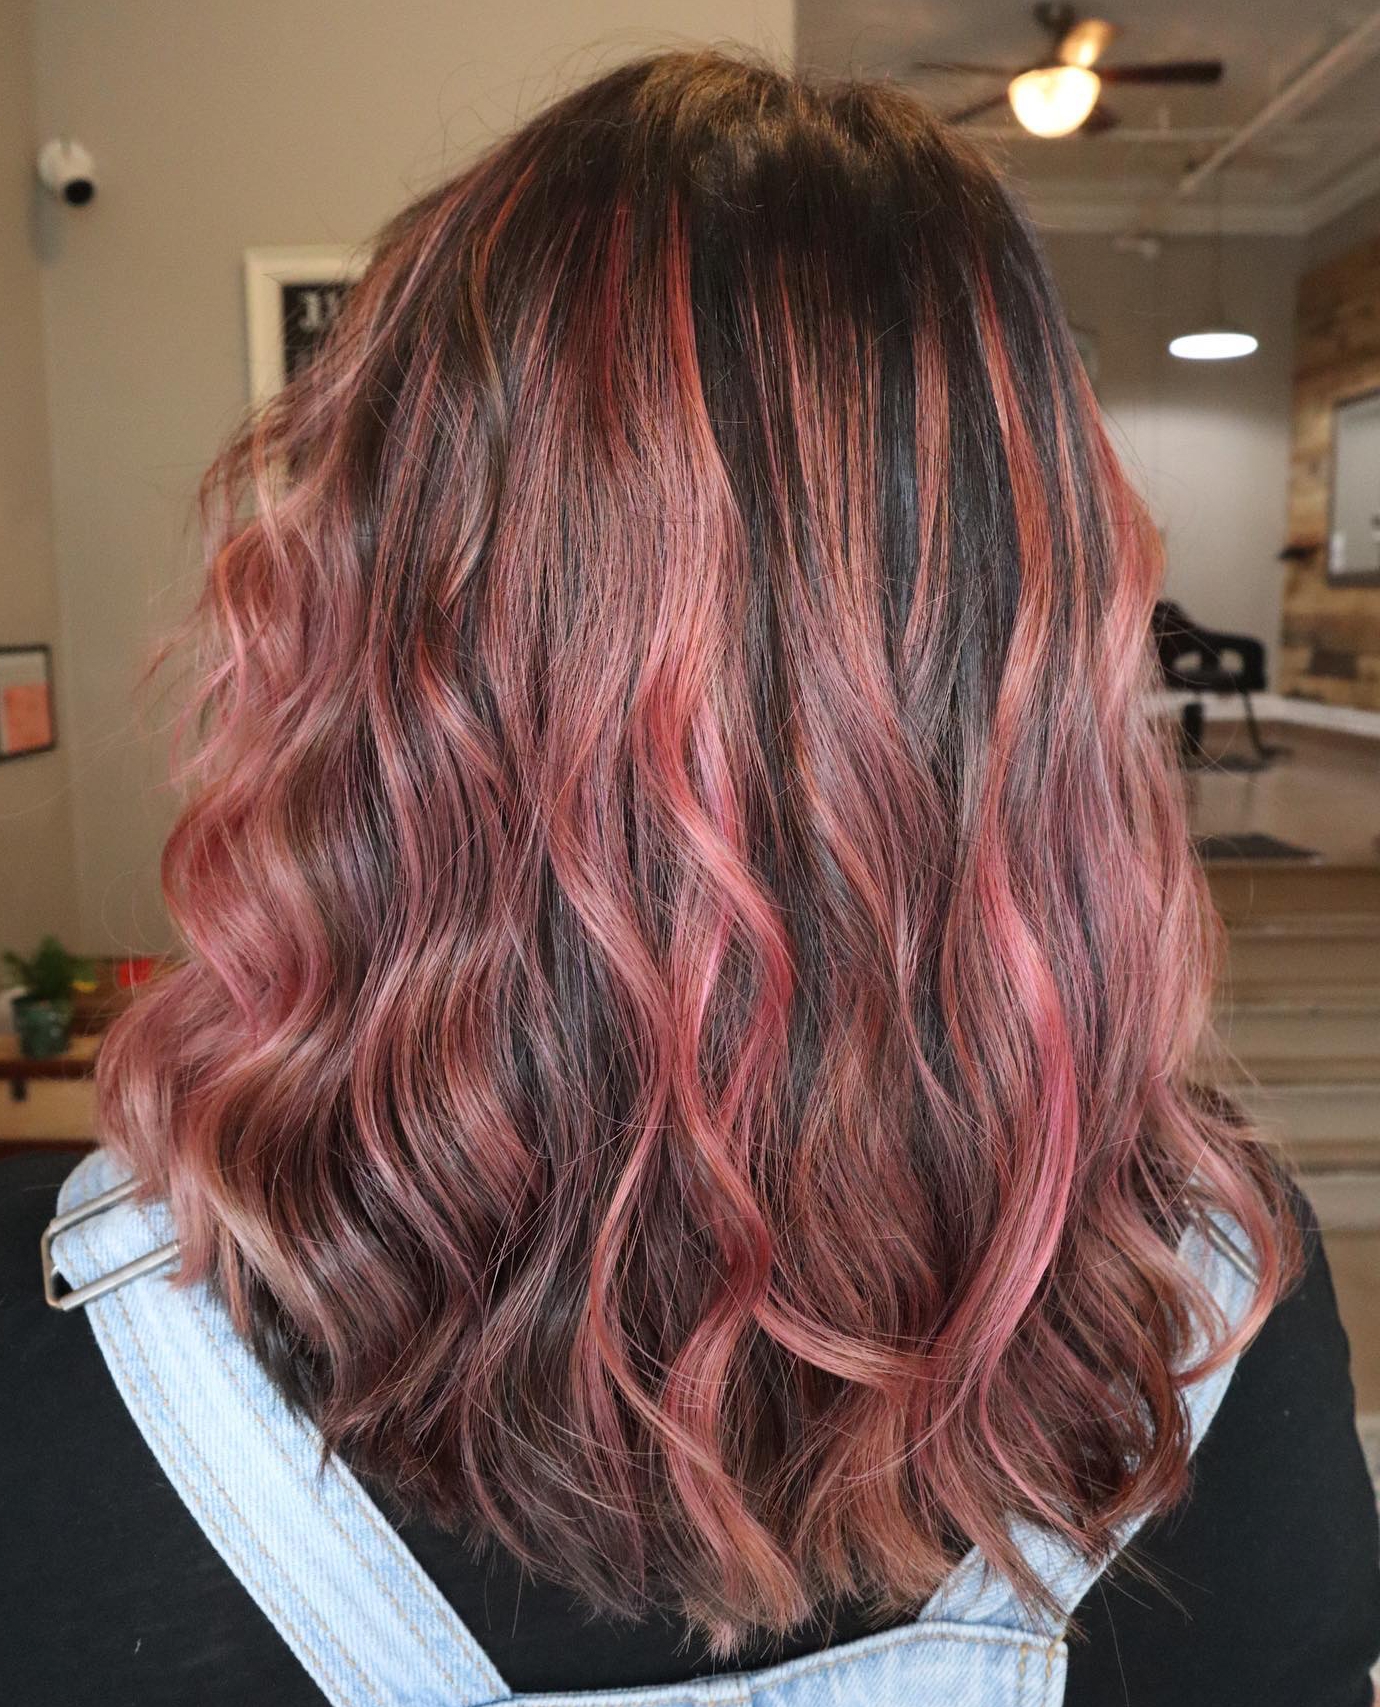 Rose Gold Highlights on Medium Length Dark Hair